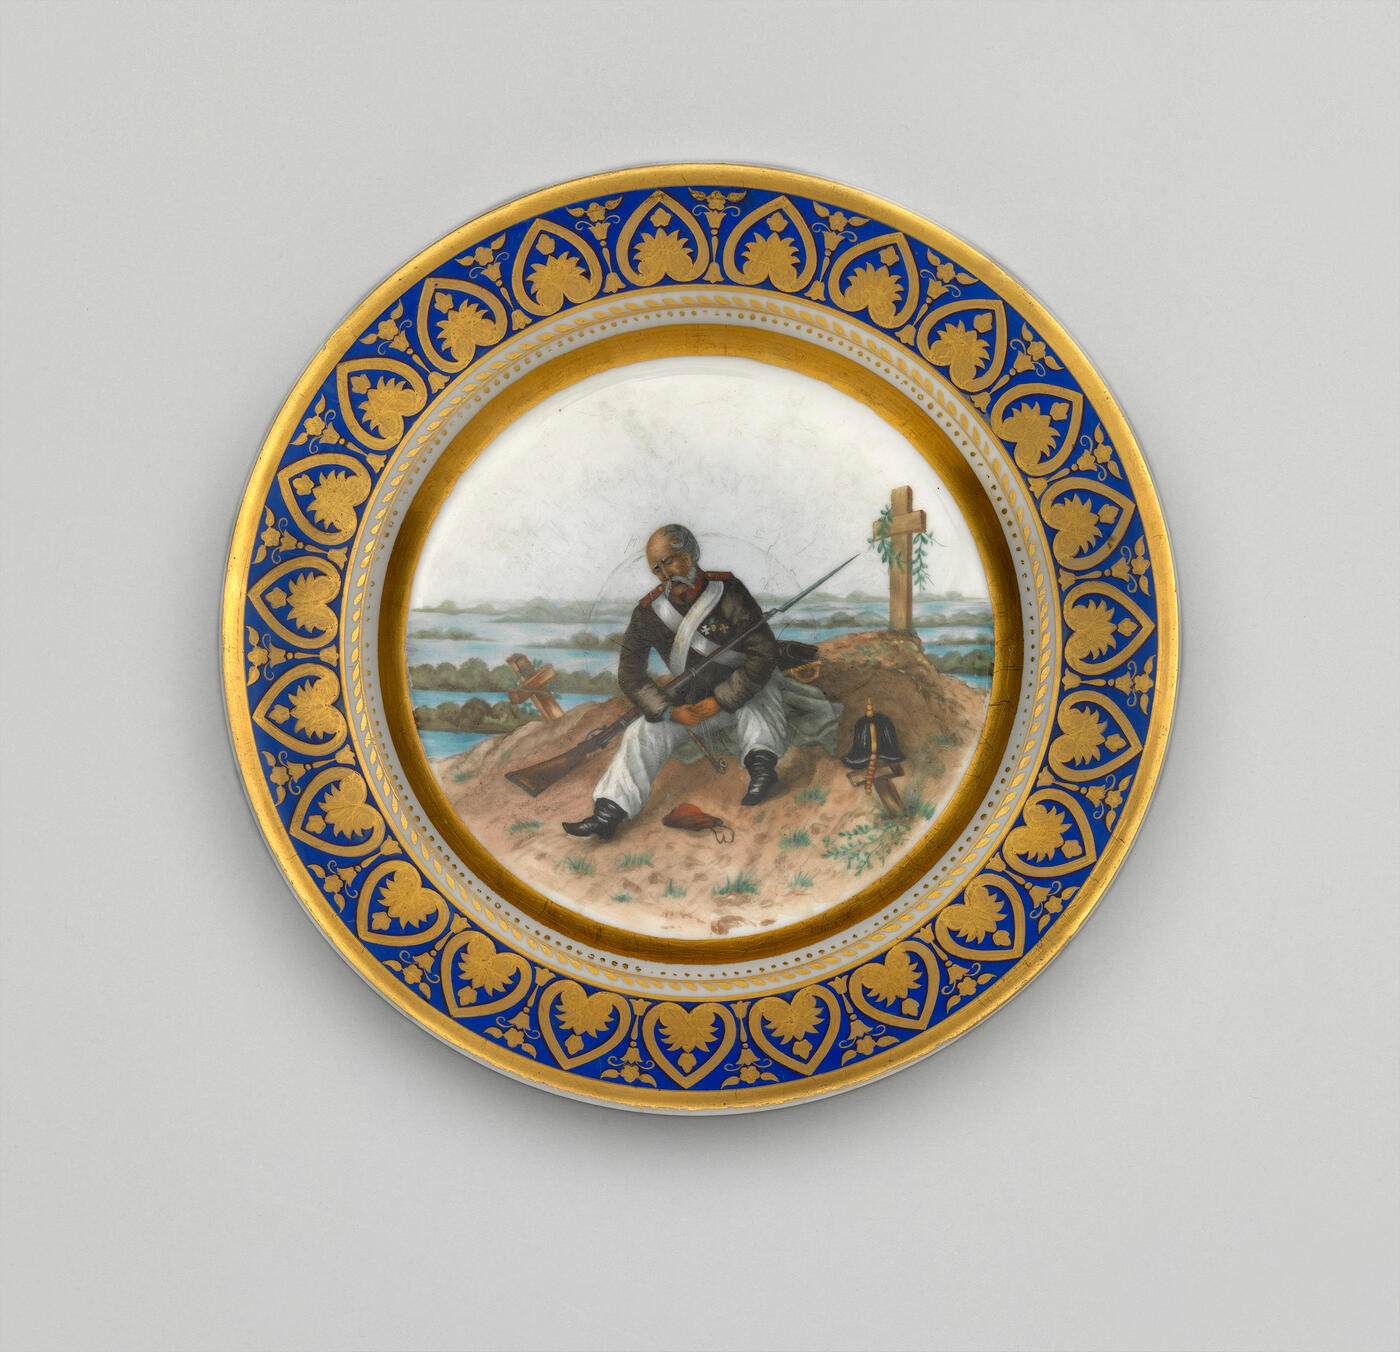 IMPERIAL PORCELAIN MANUFACTORY, PERIOD OF NICHOLAS I (1825-1855), CIRCA 1827